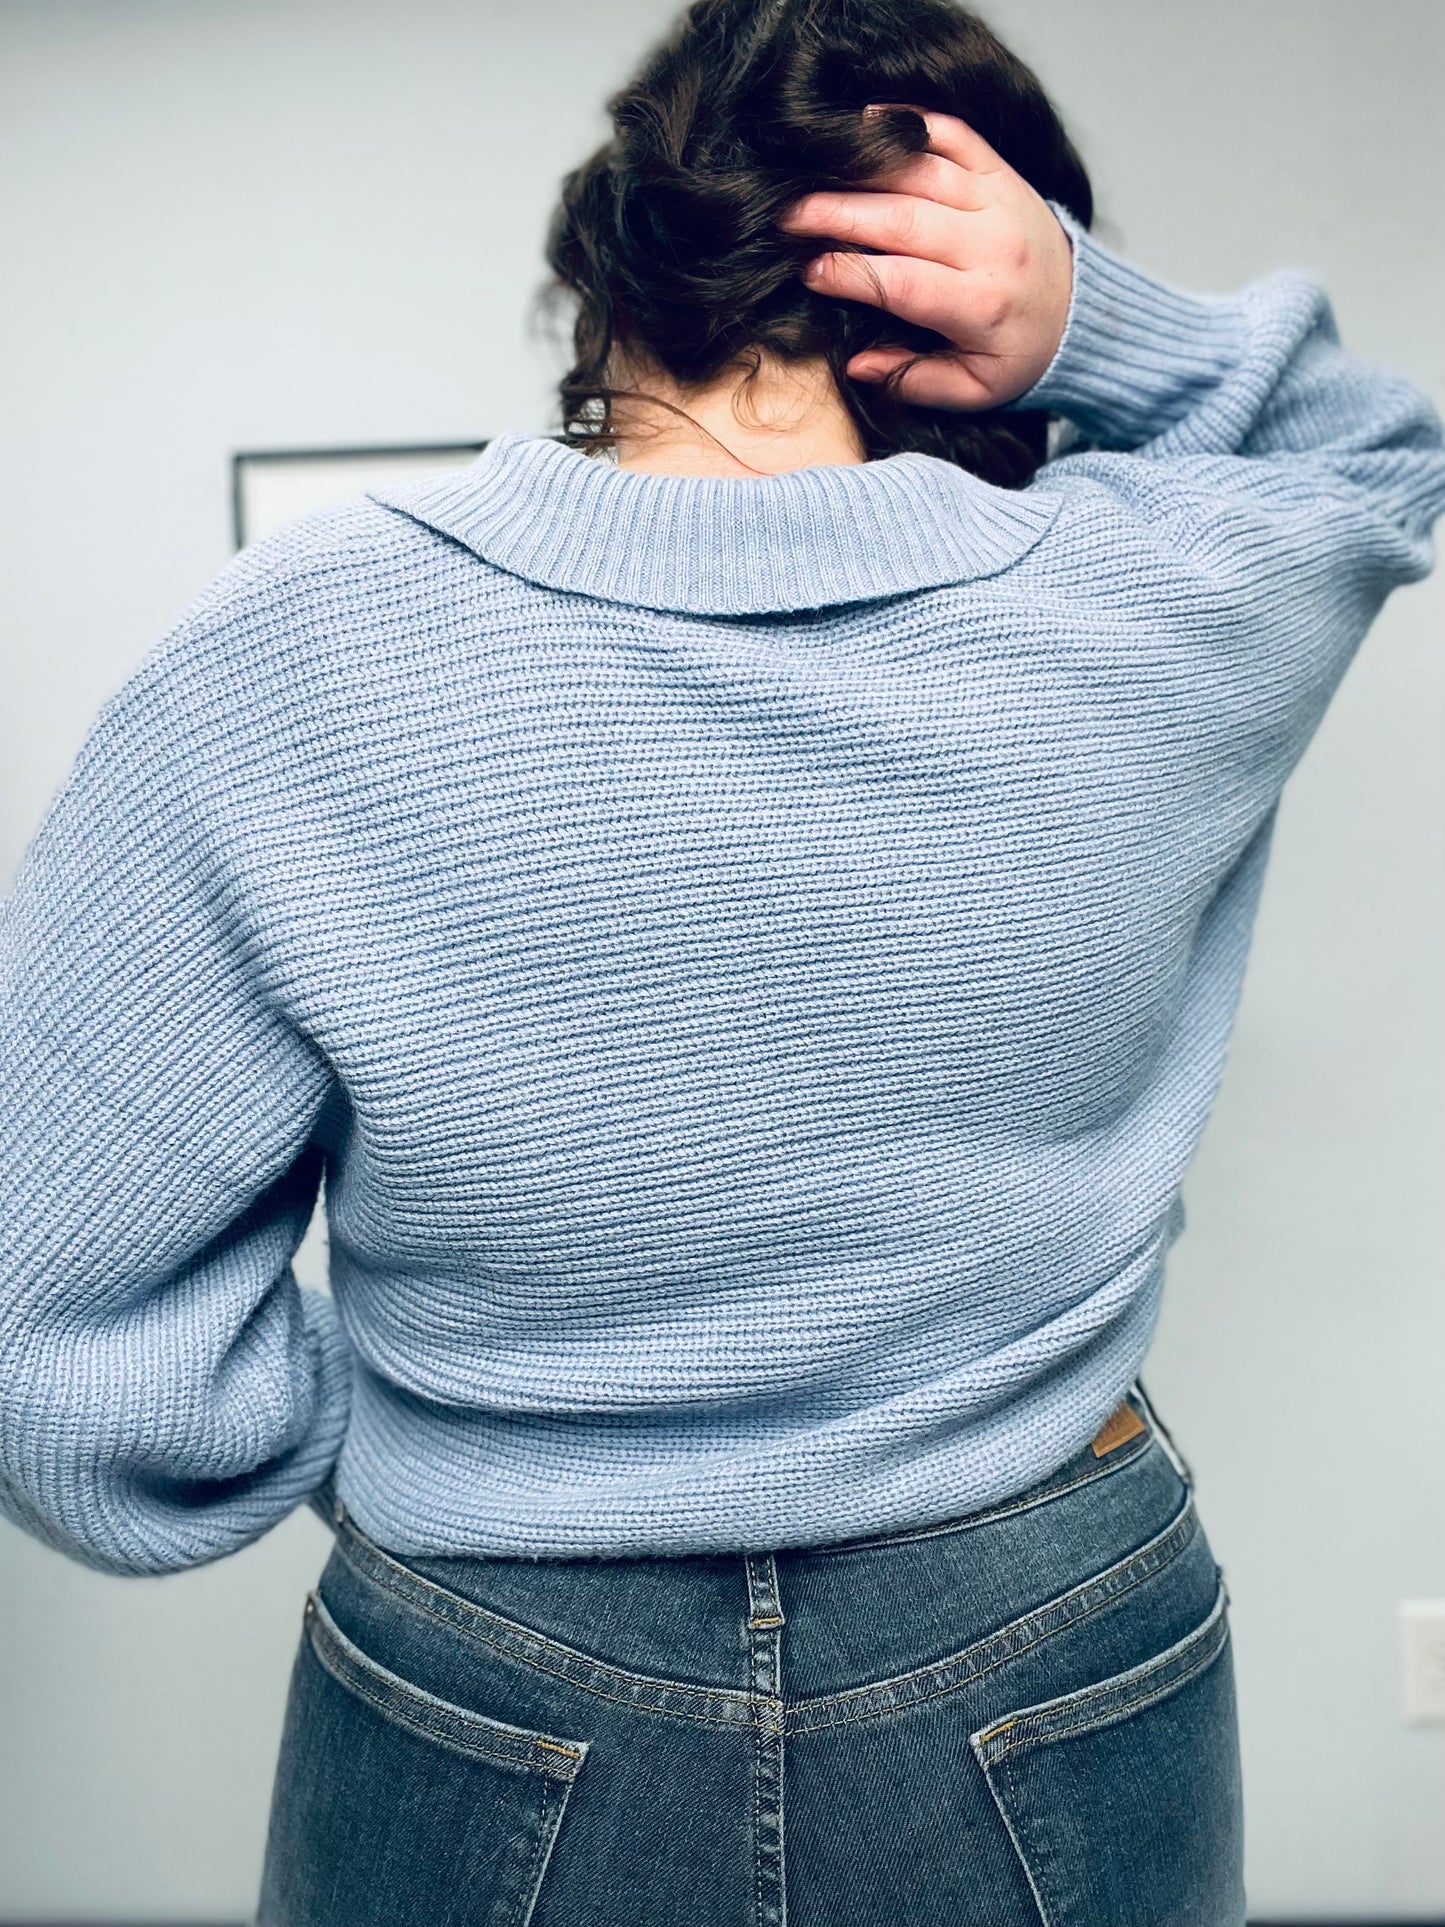 Blue v neck sweater